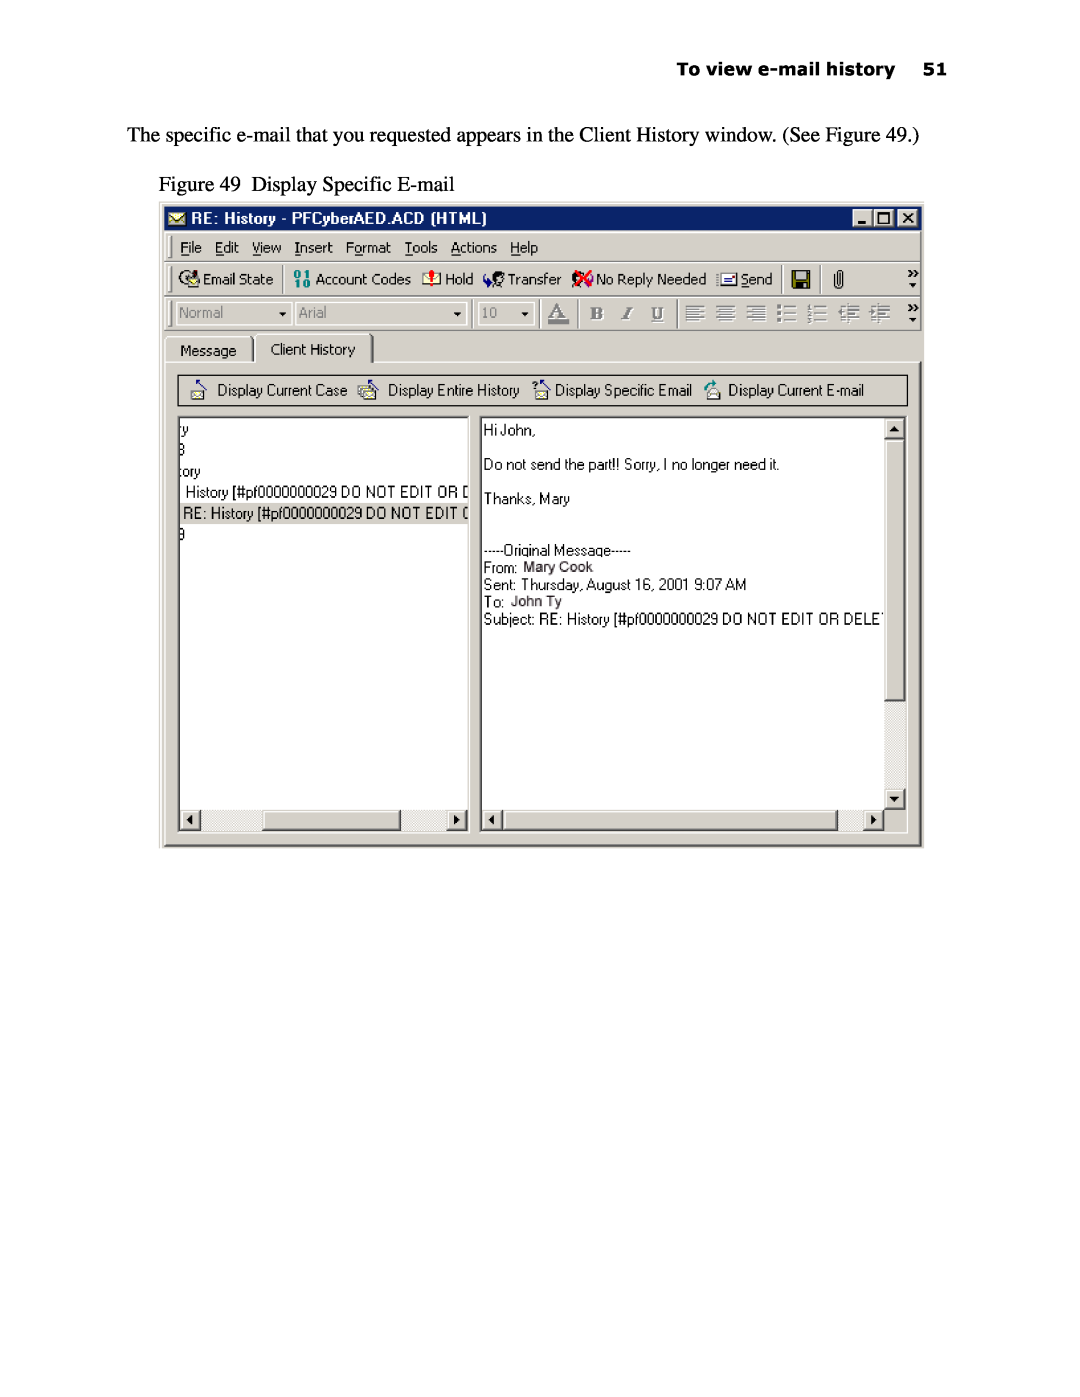 Mitel 6150 MCC manual Display Specific E-mail, 7RYLHZHPDLOKLVWRU 